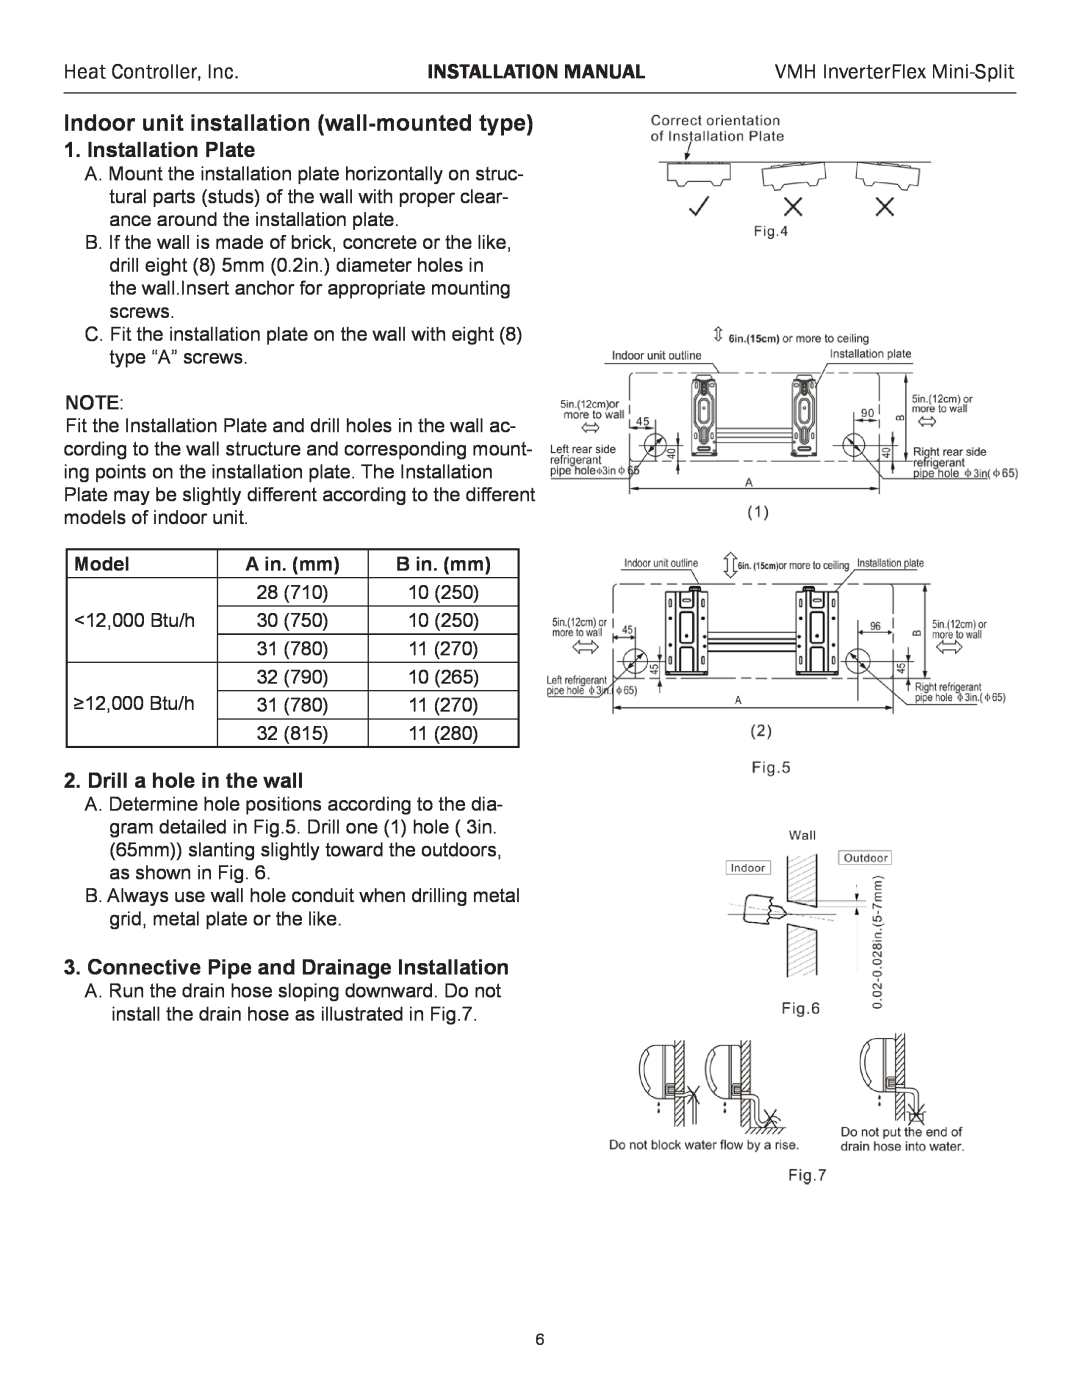 Heat Controller VMH 36, VMH 27, VMH 18 Indoor unit installation wall-mountedtype, Heat Controller, Inc, Installation Manual 